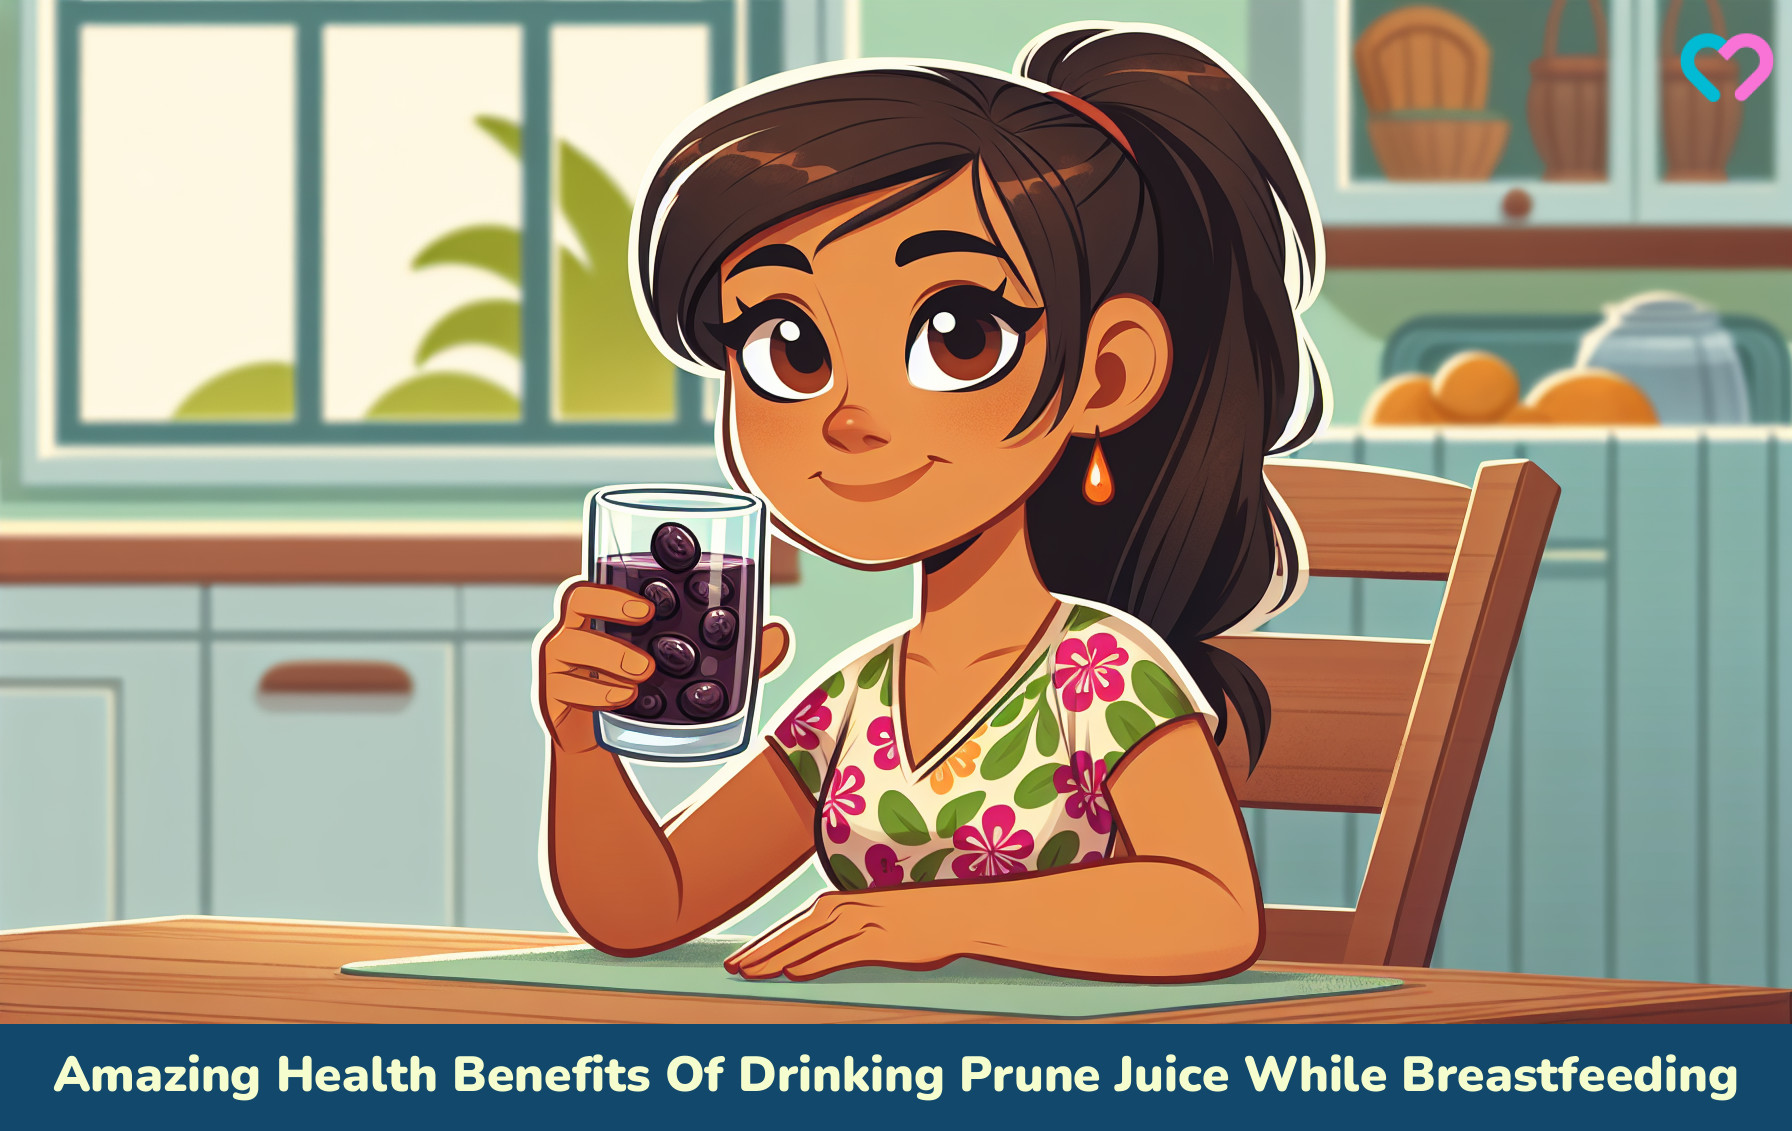 prune juice while breastfeeding_illustration